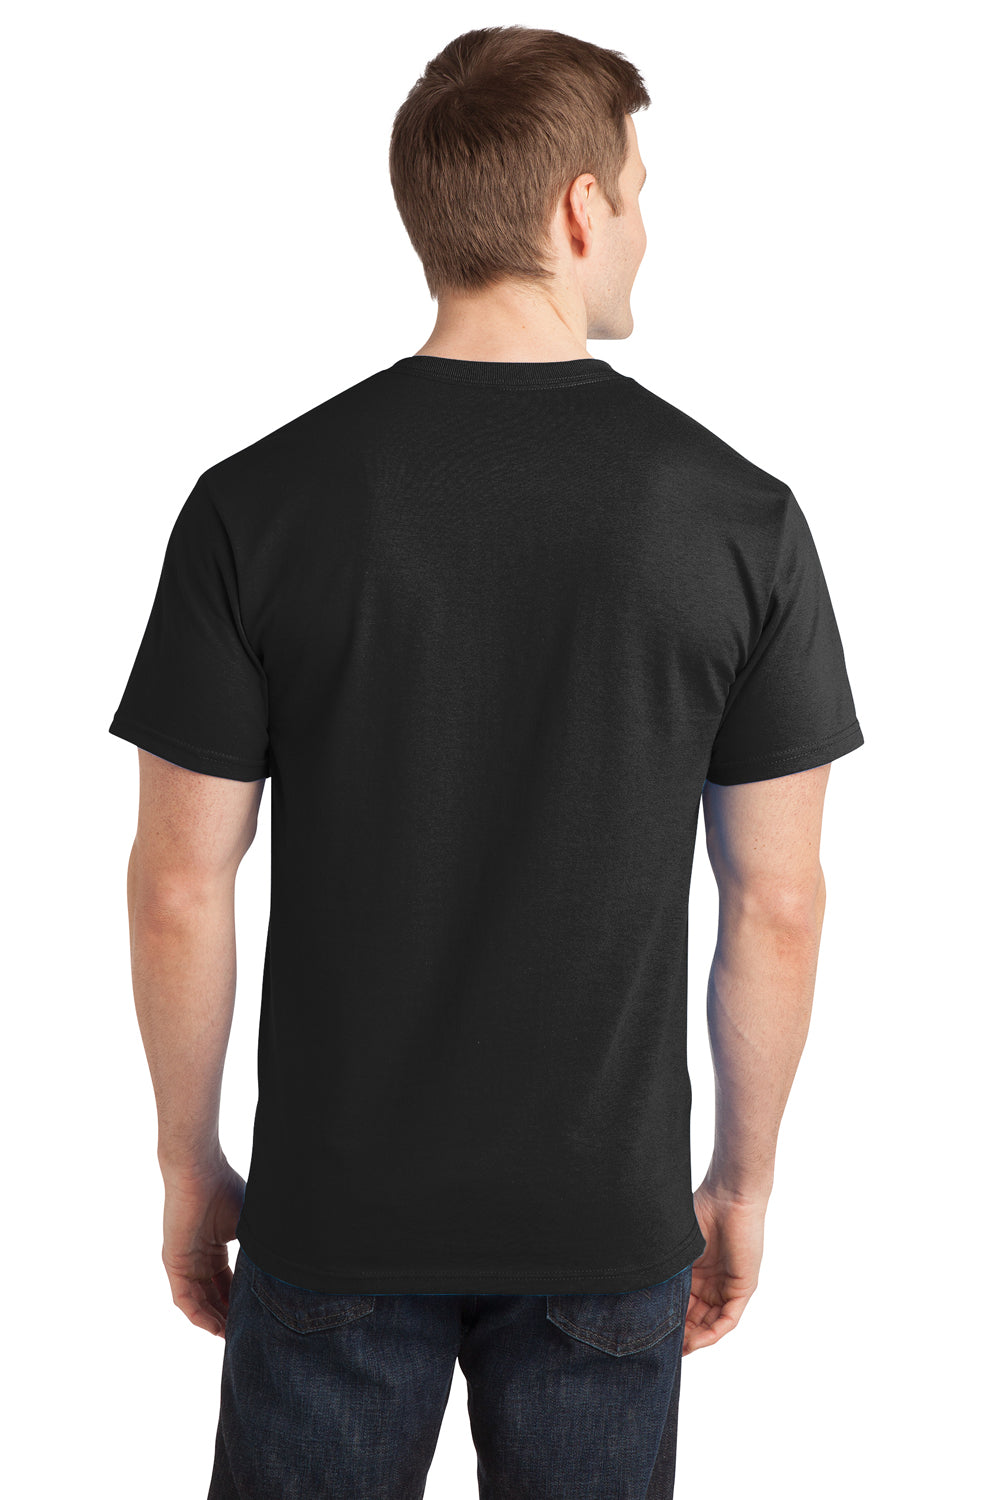 Port & Company PC150 Mens Short Sleeve Crewneck T-Shirt Black Back